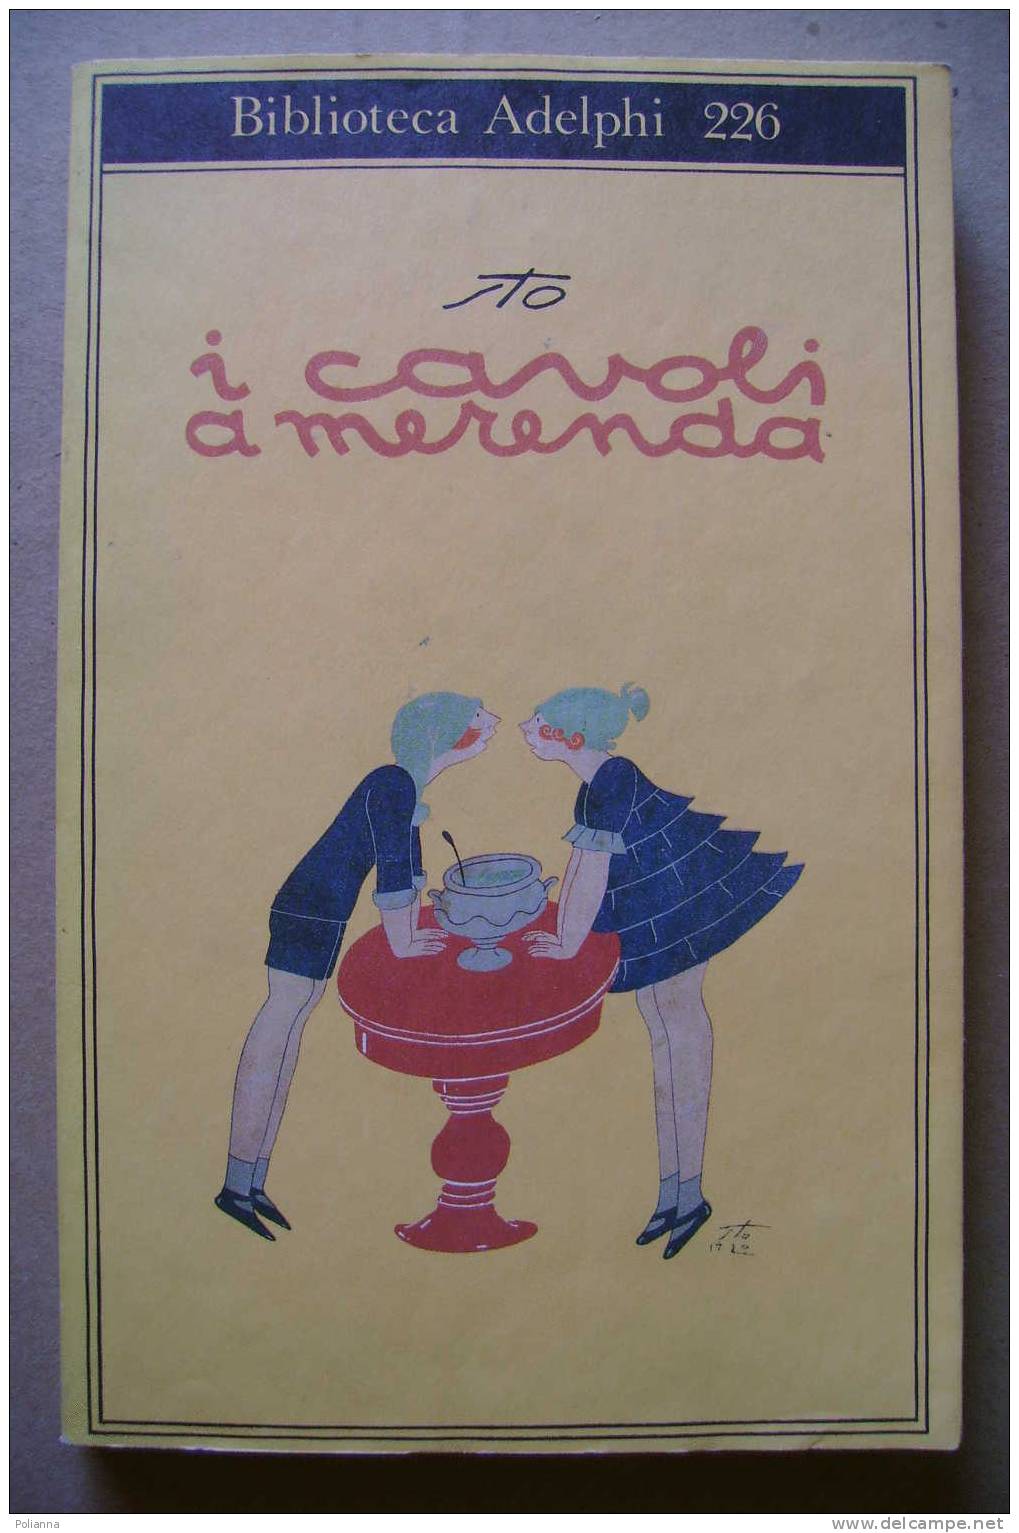 PDF/33 Sto (Sergio Tofano) I CAVOLI A MERENDA Biblioteca Adelphi I^ Ed.1990 - Teenagers & Kids